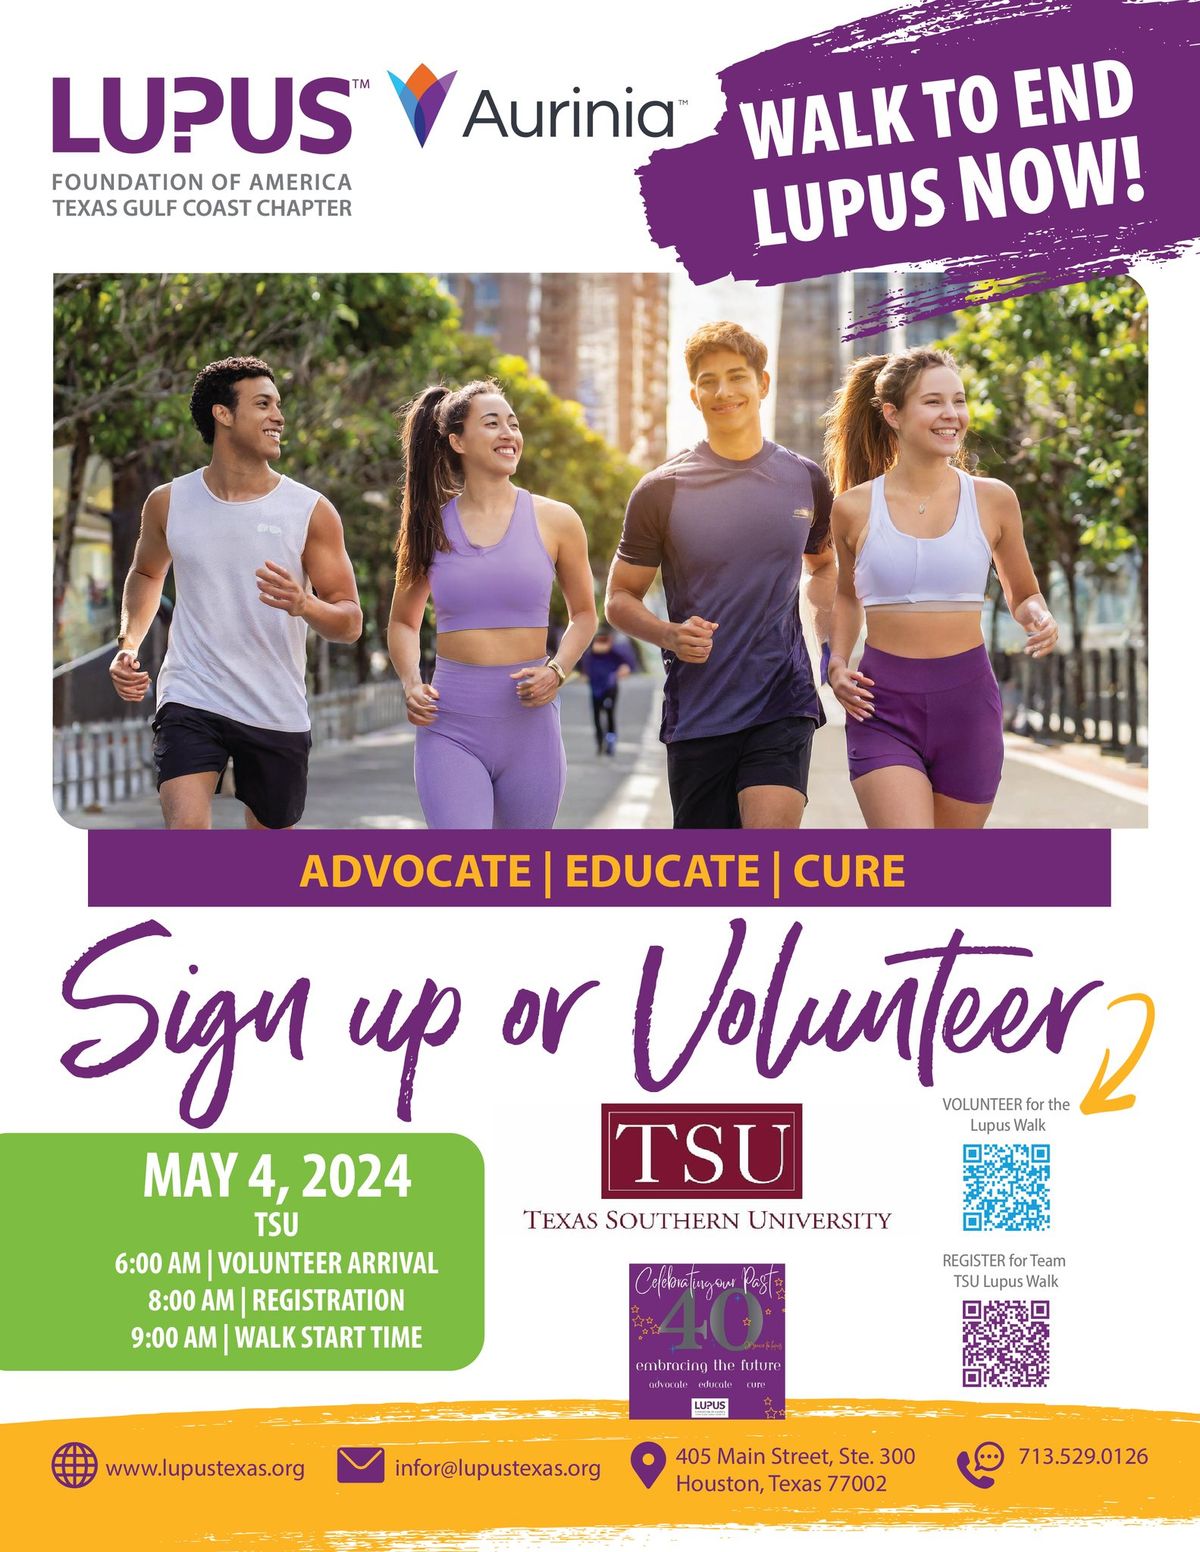 Walk to End Lupus NOW! @Texas Southern University!